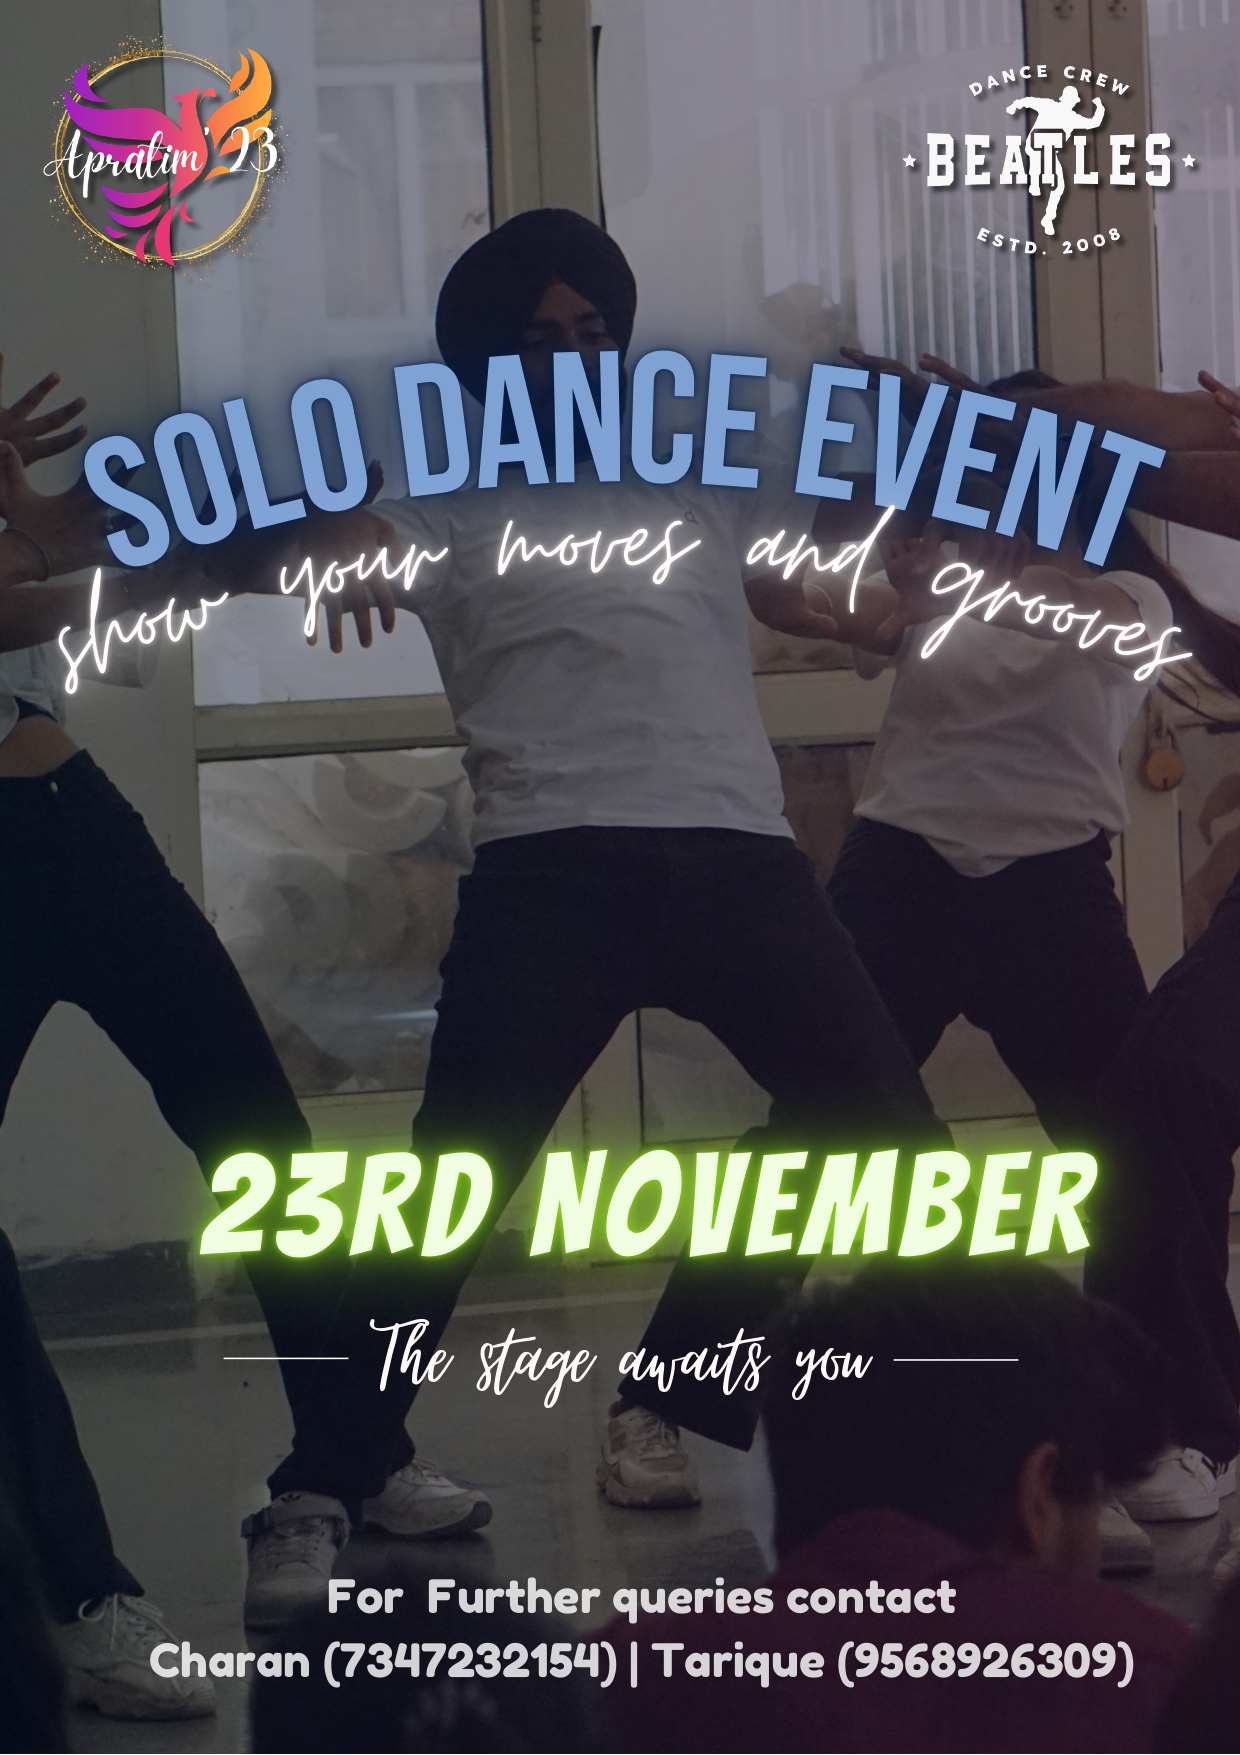 Beatles Solo Dance Event